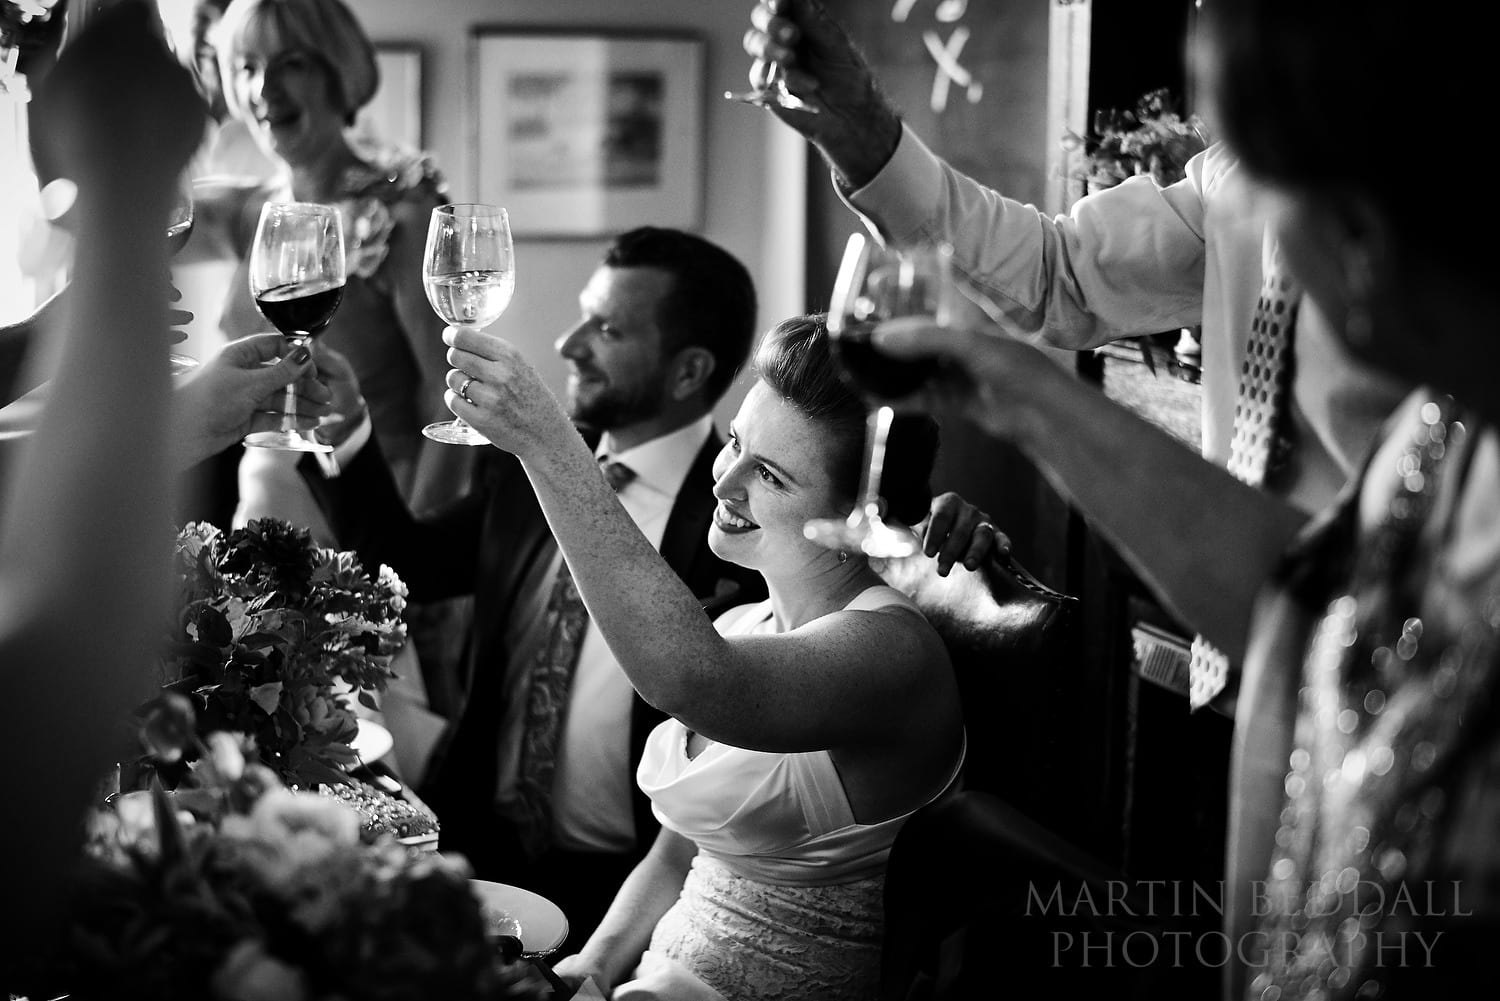 Bull and Last wedding toasts